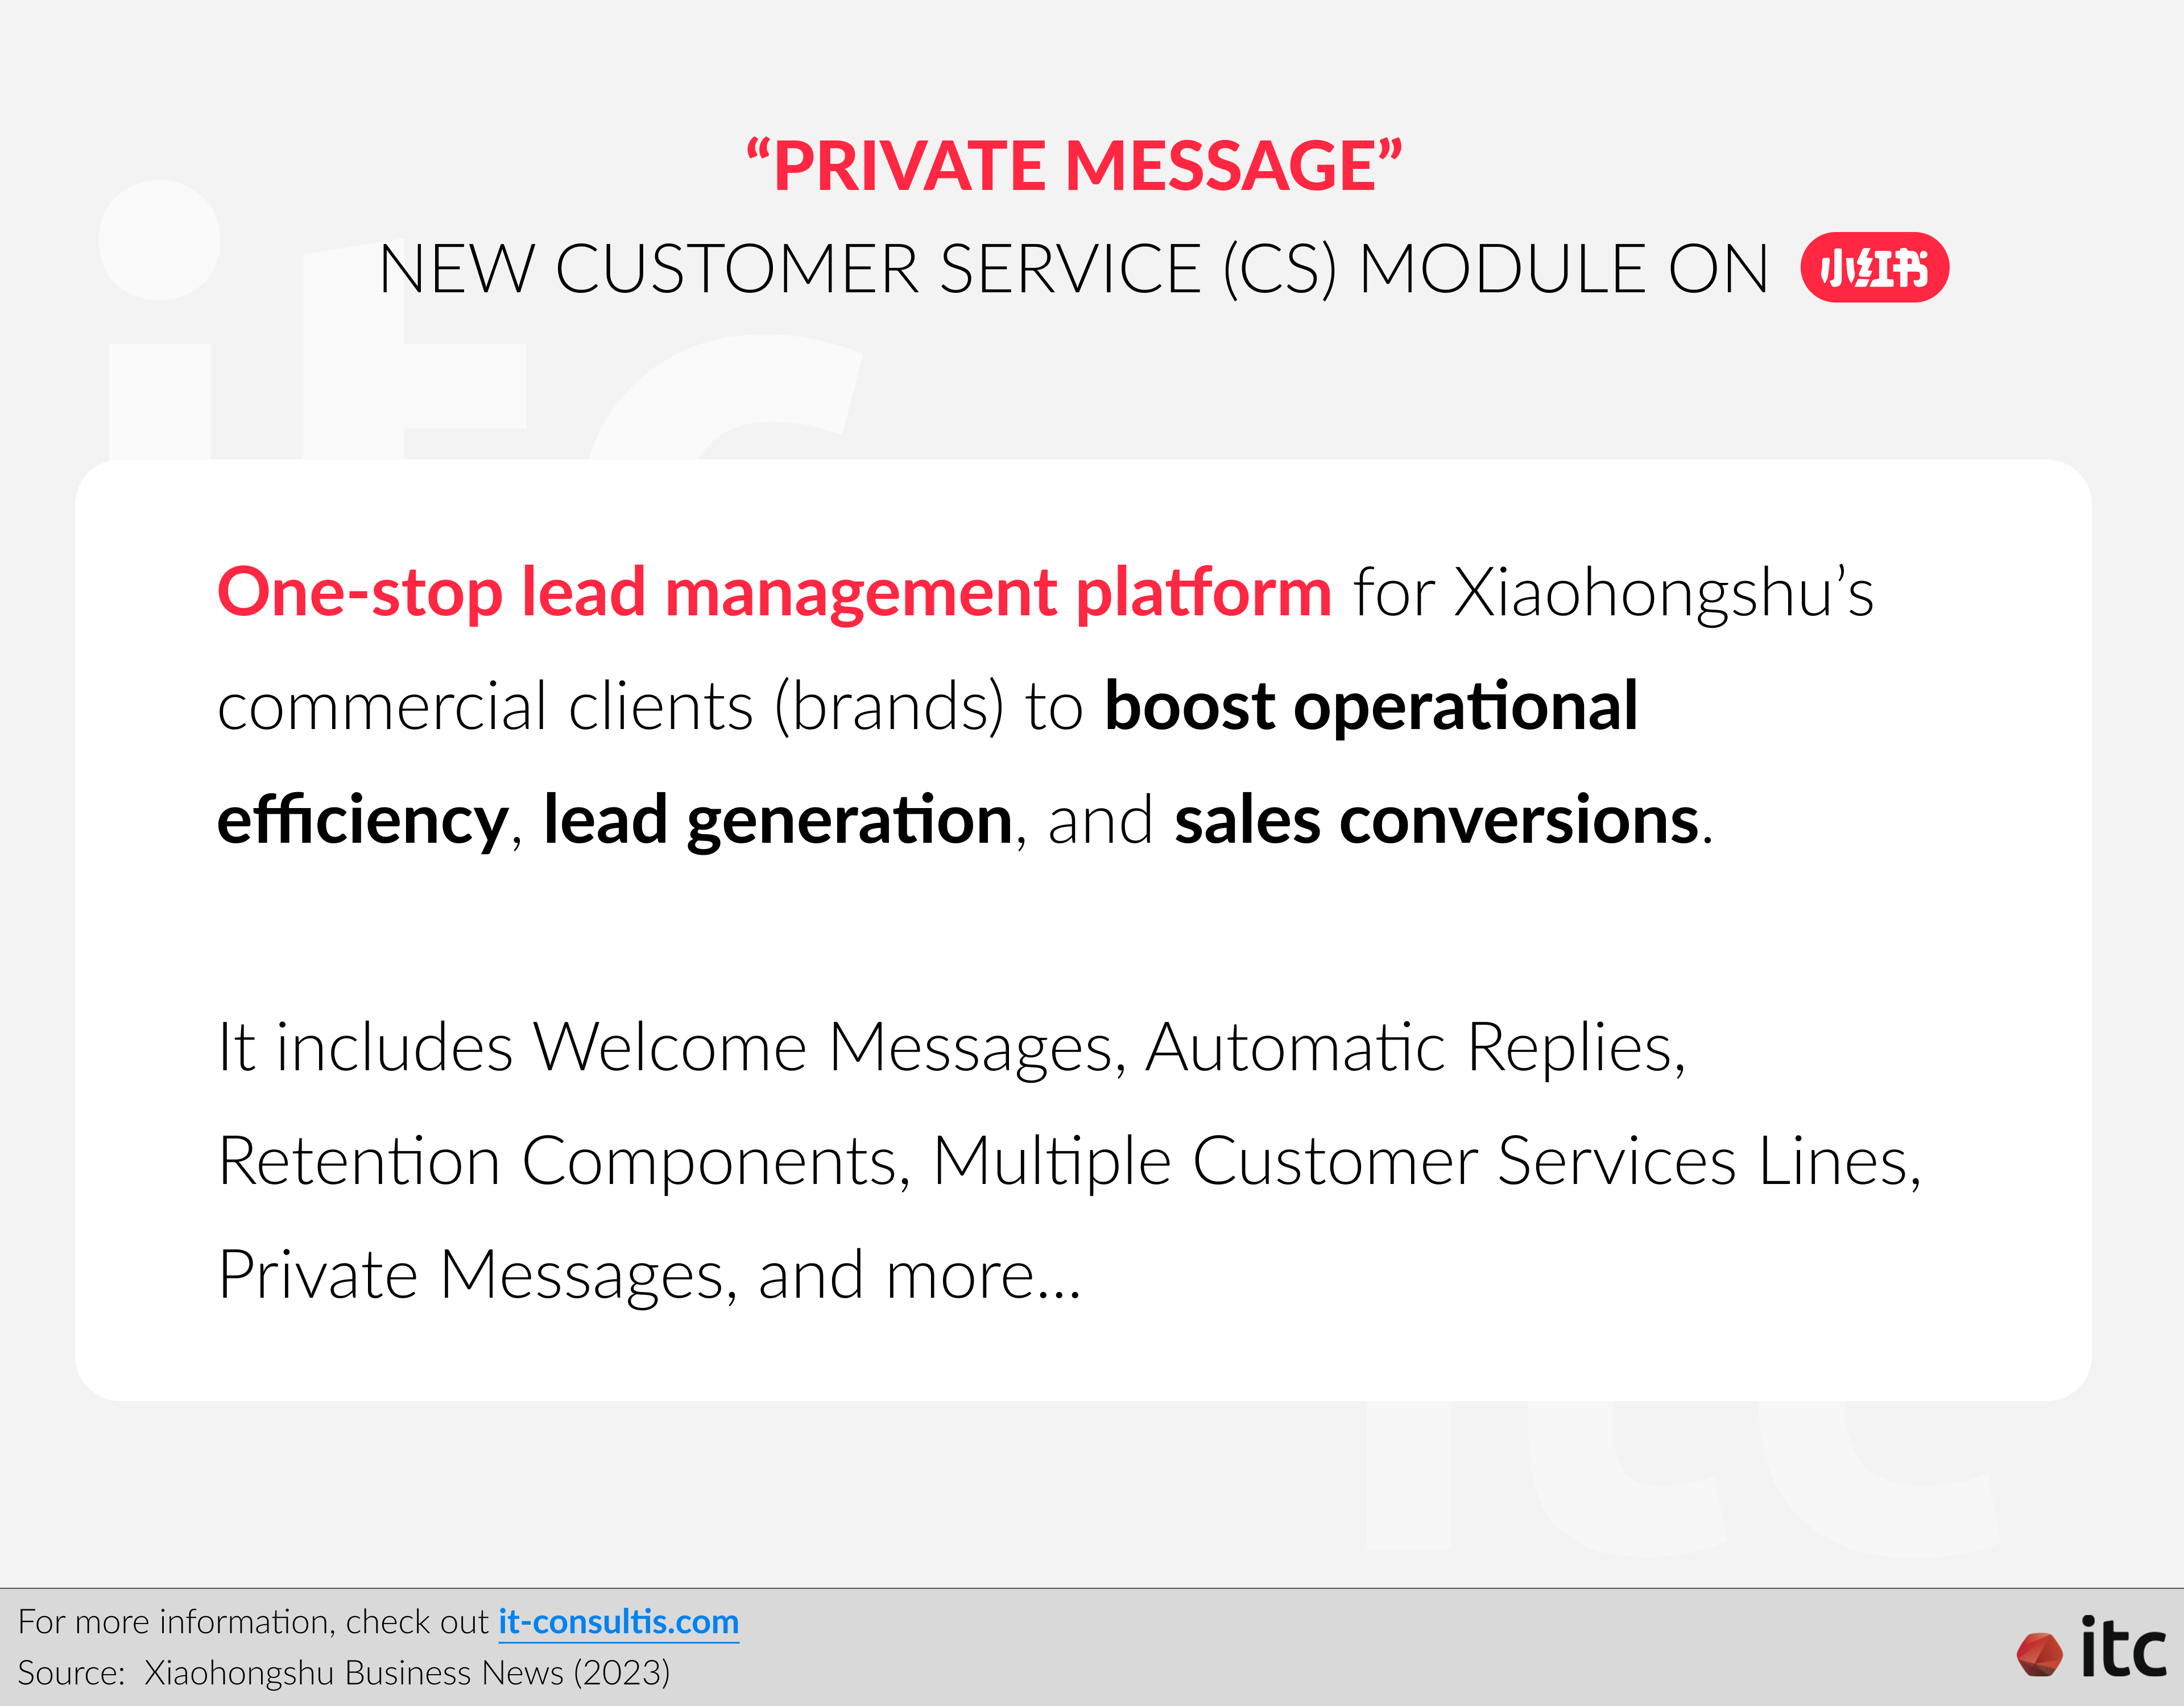 Xiaohongshu (RED) Private message - New customer service module